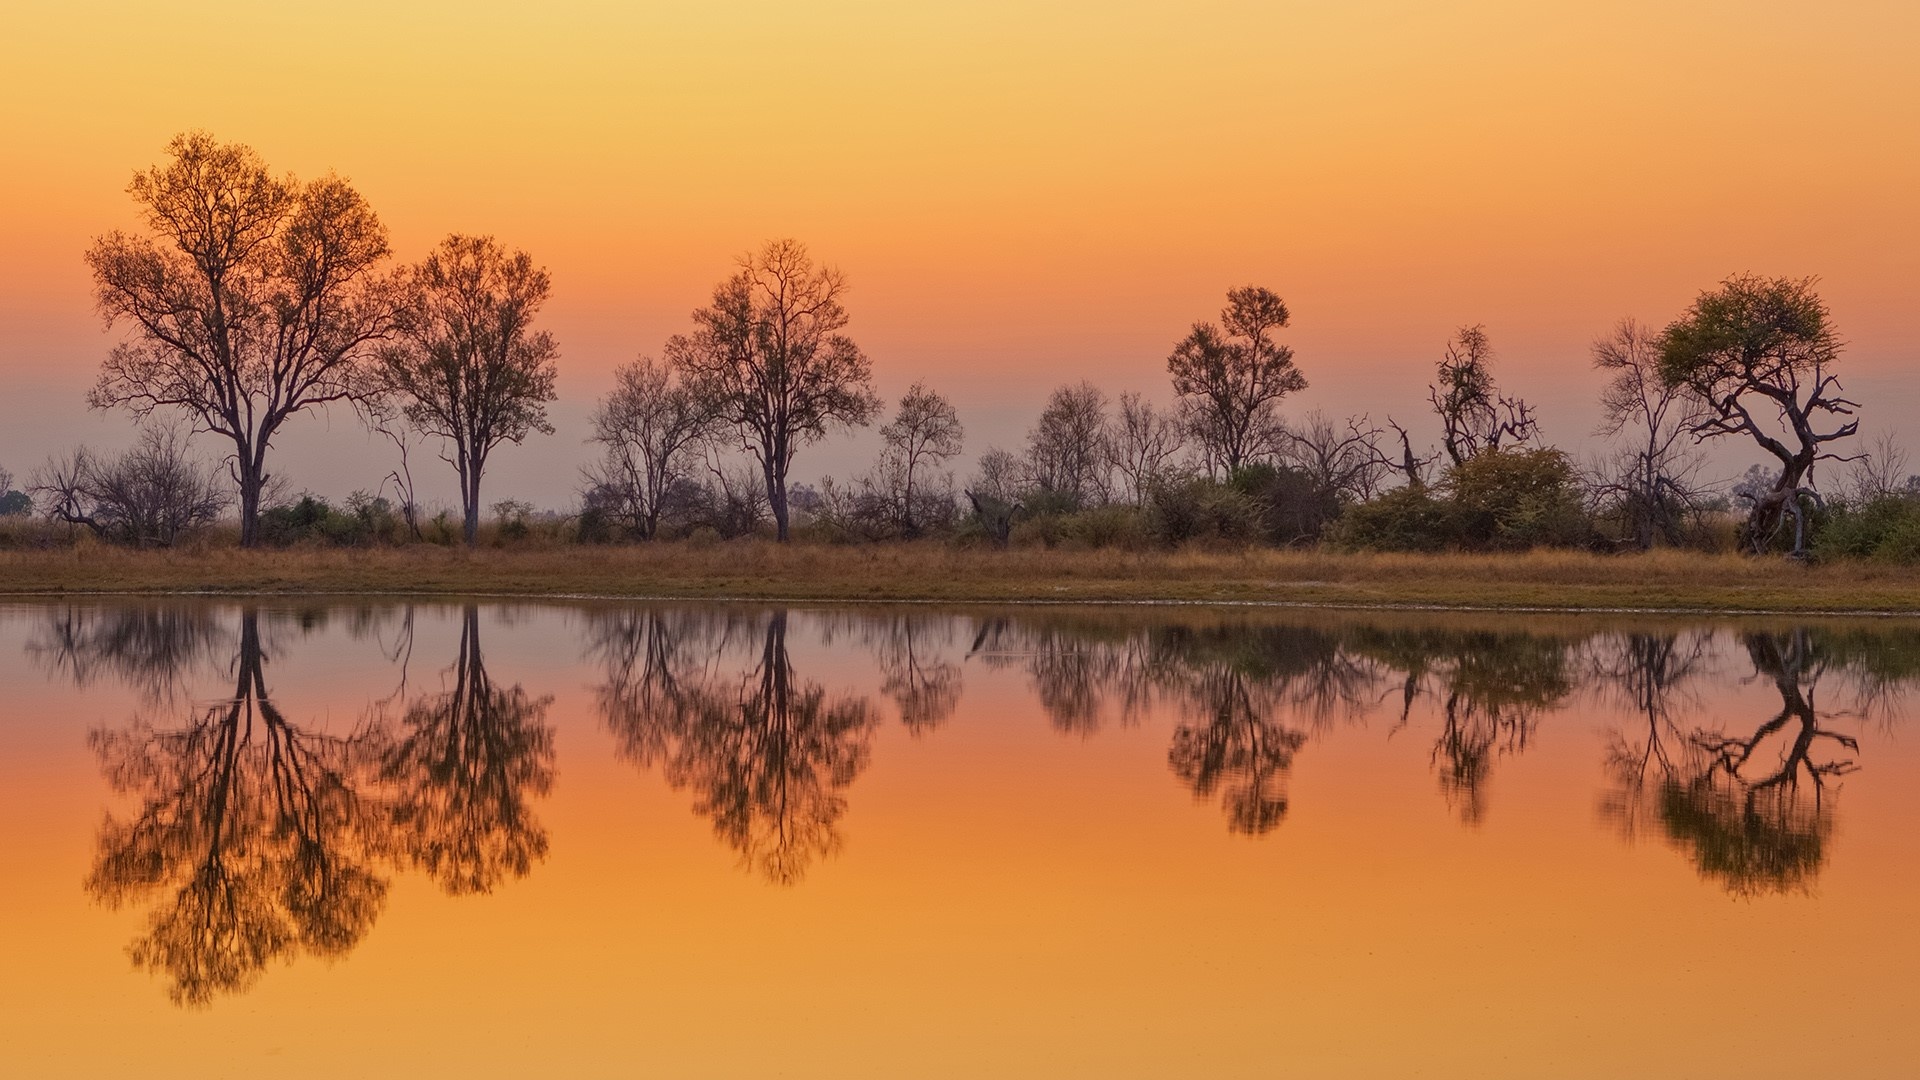 HD wallpaper, Windows 10 Spotlight, African Sunrise, Dawn In Okavango Delta, 1920X1080 Full Hd Desktop, Desktop 1080P Botswana Wallpaper Image, Moremi Game Reserve